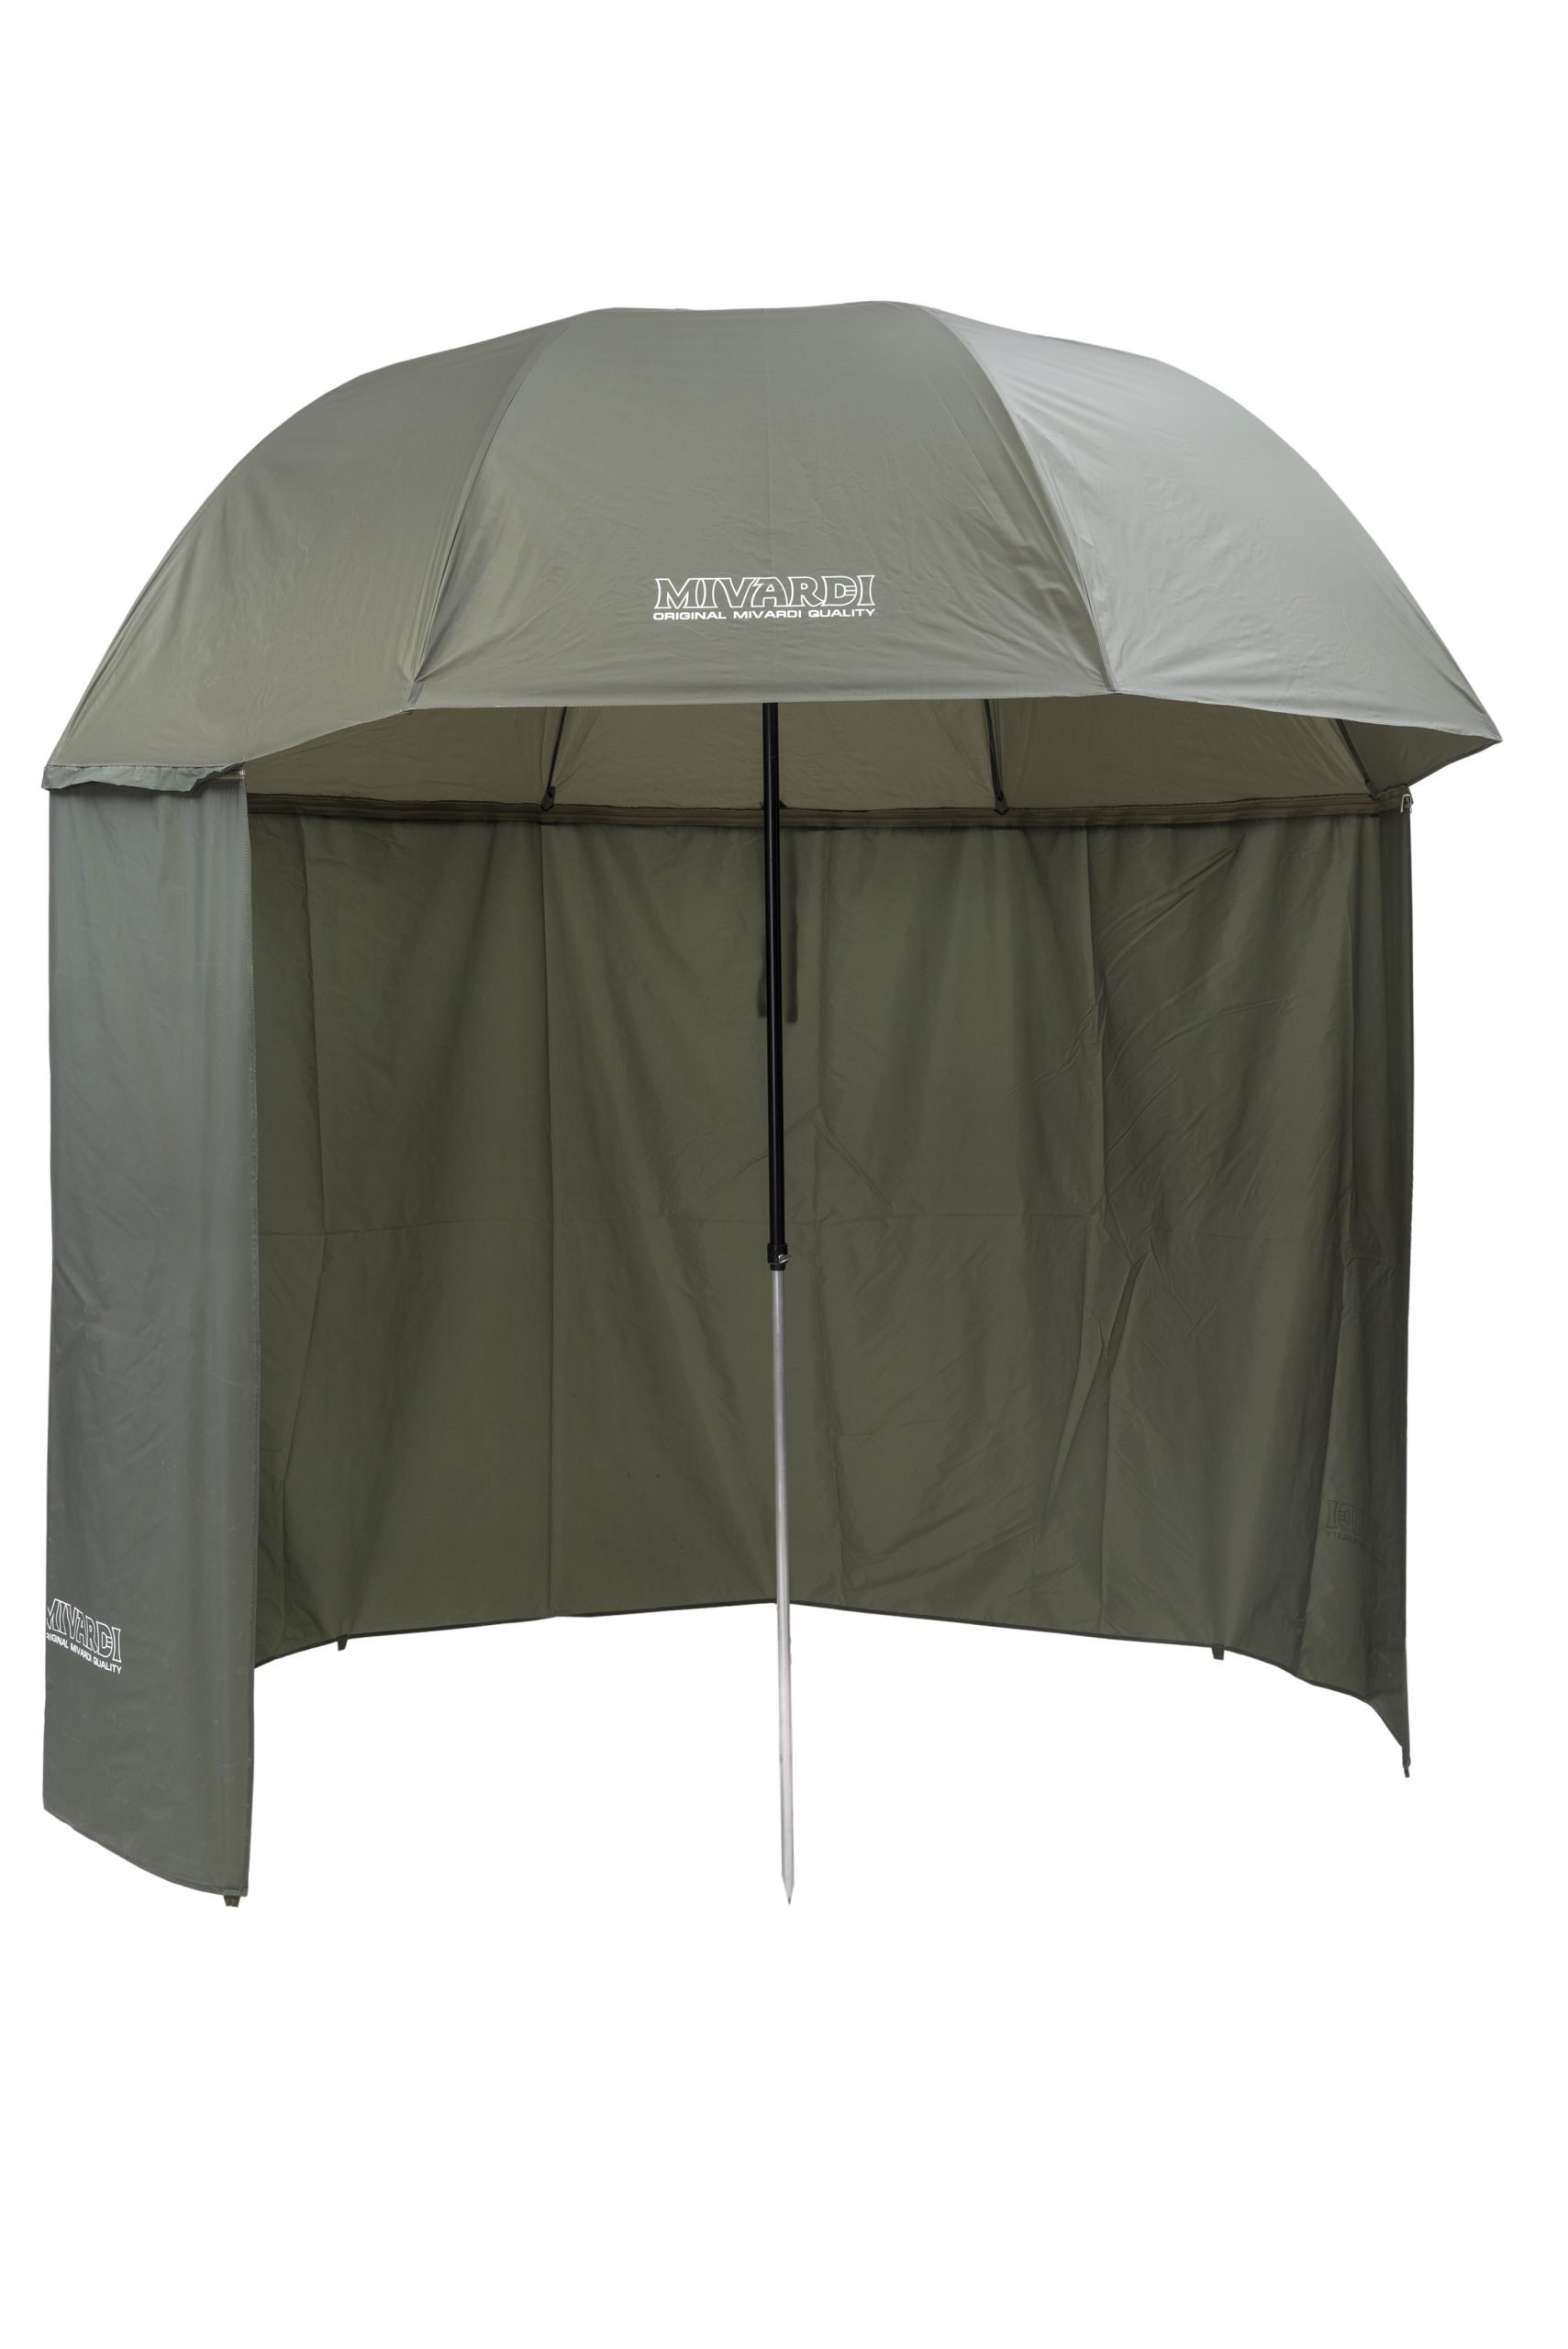 Mivardi Umbrella Green PVC + side cover M-AUSG250C